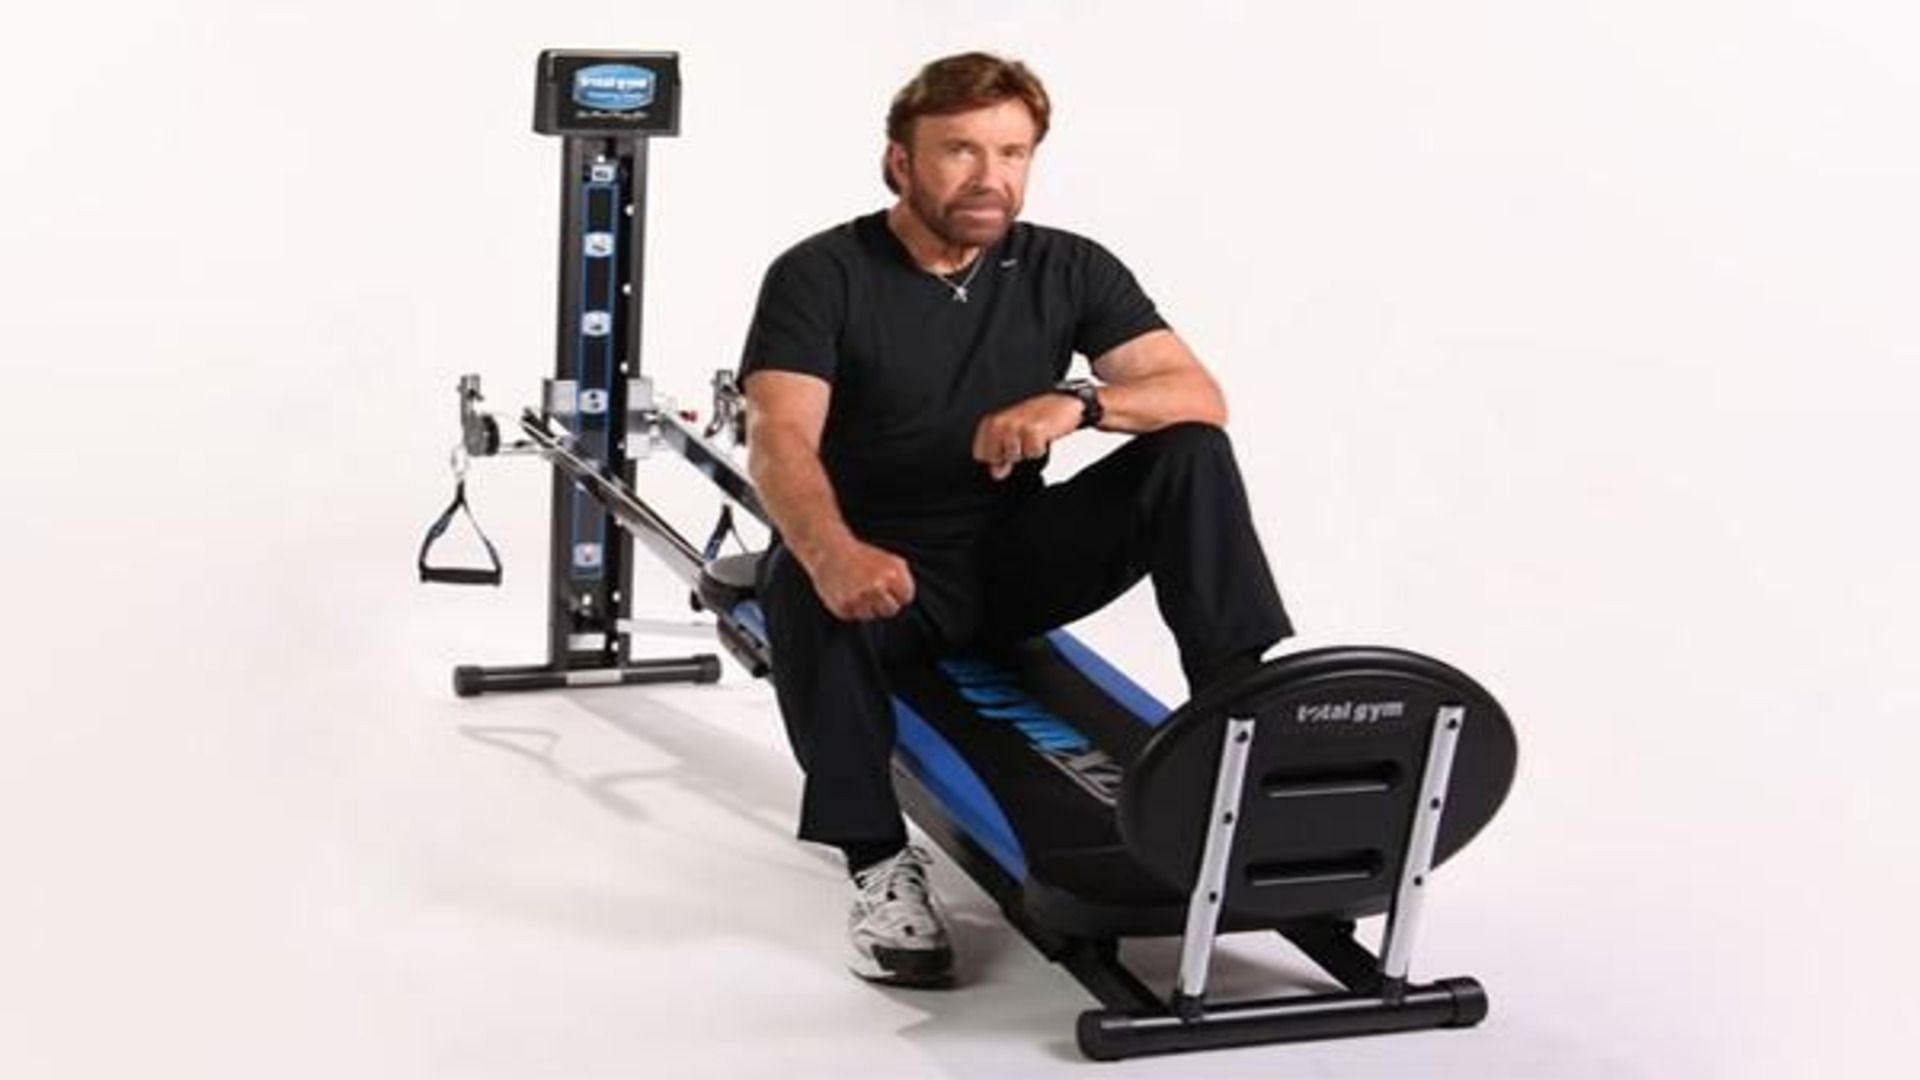 Chuck Norris workout machine. (Image via Pinterest)